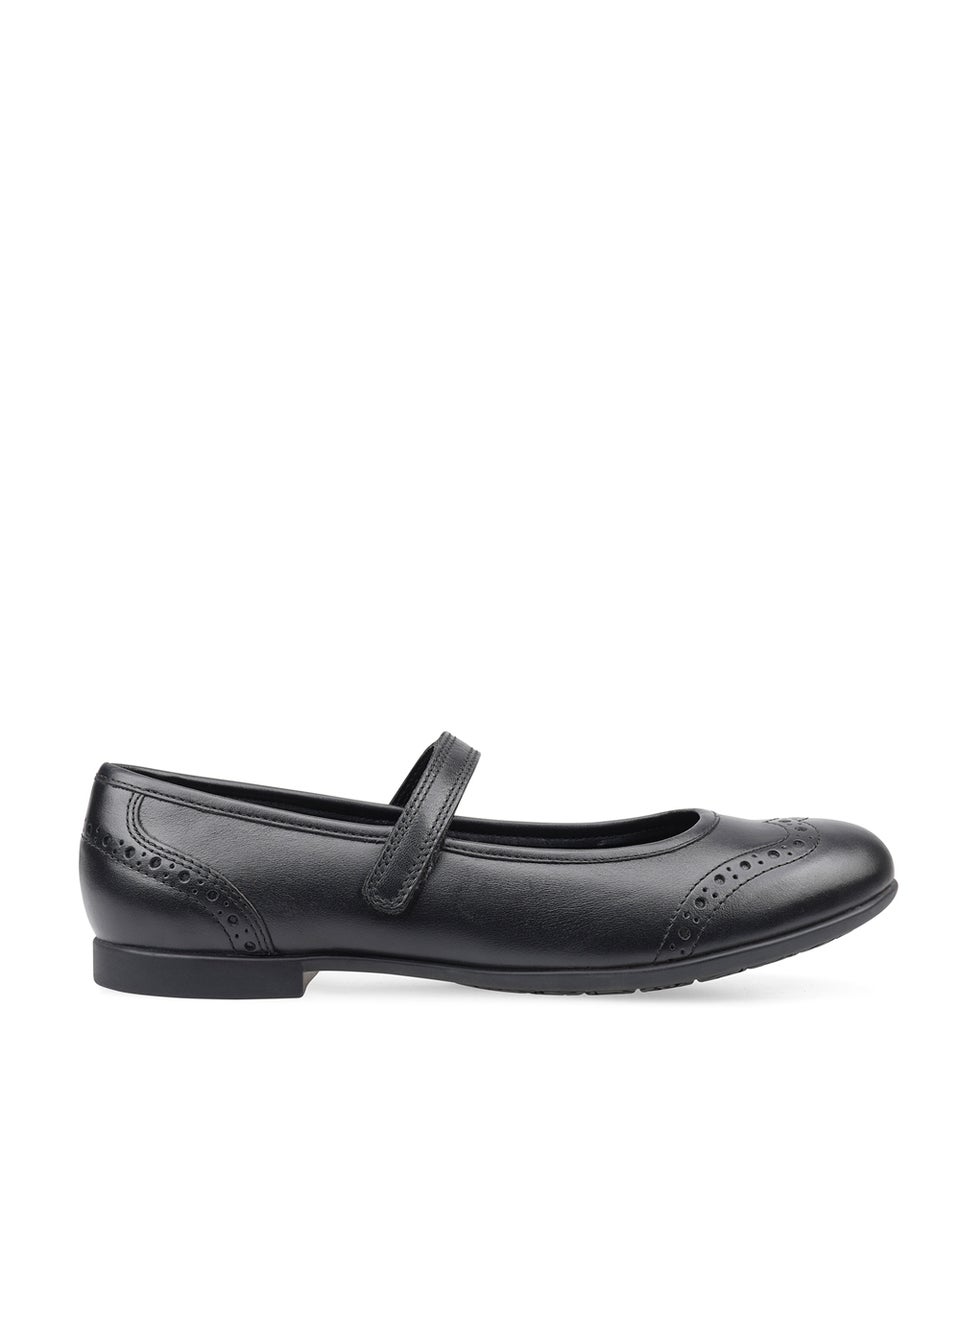 Start-Rite Black Impress Leather School Shoes (Standard Fit)